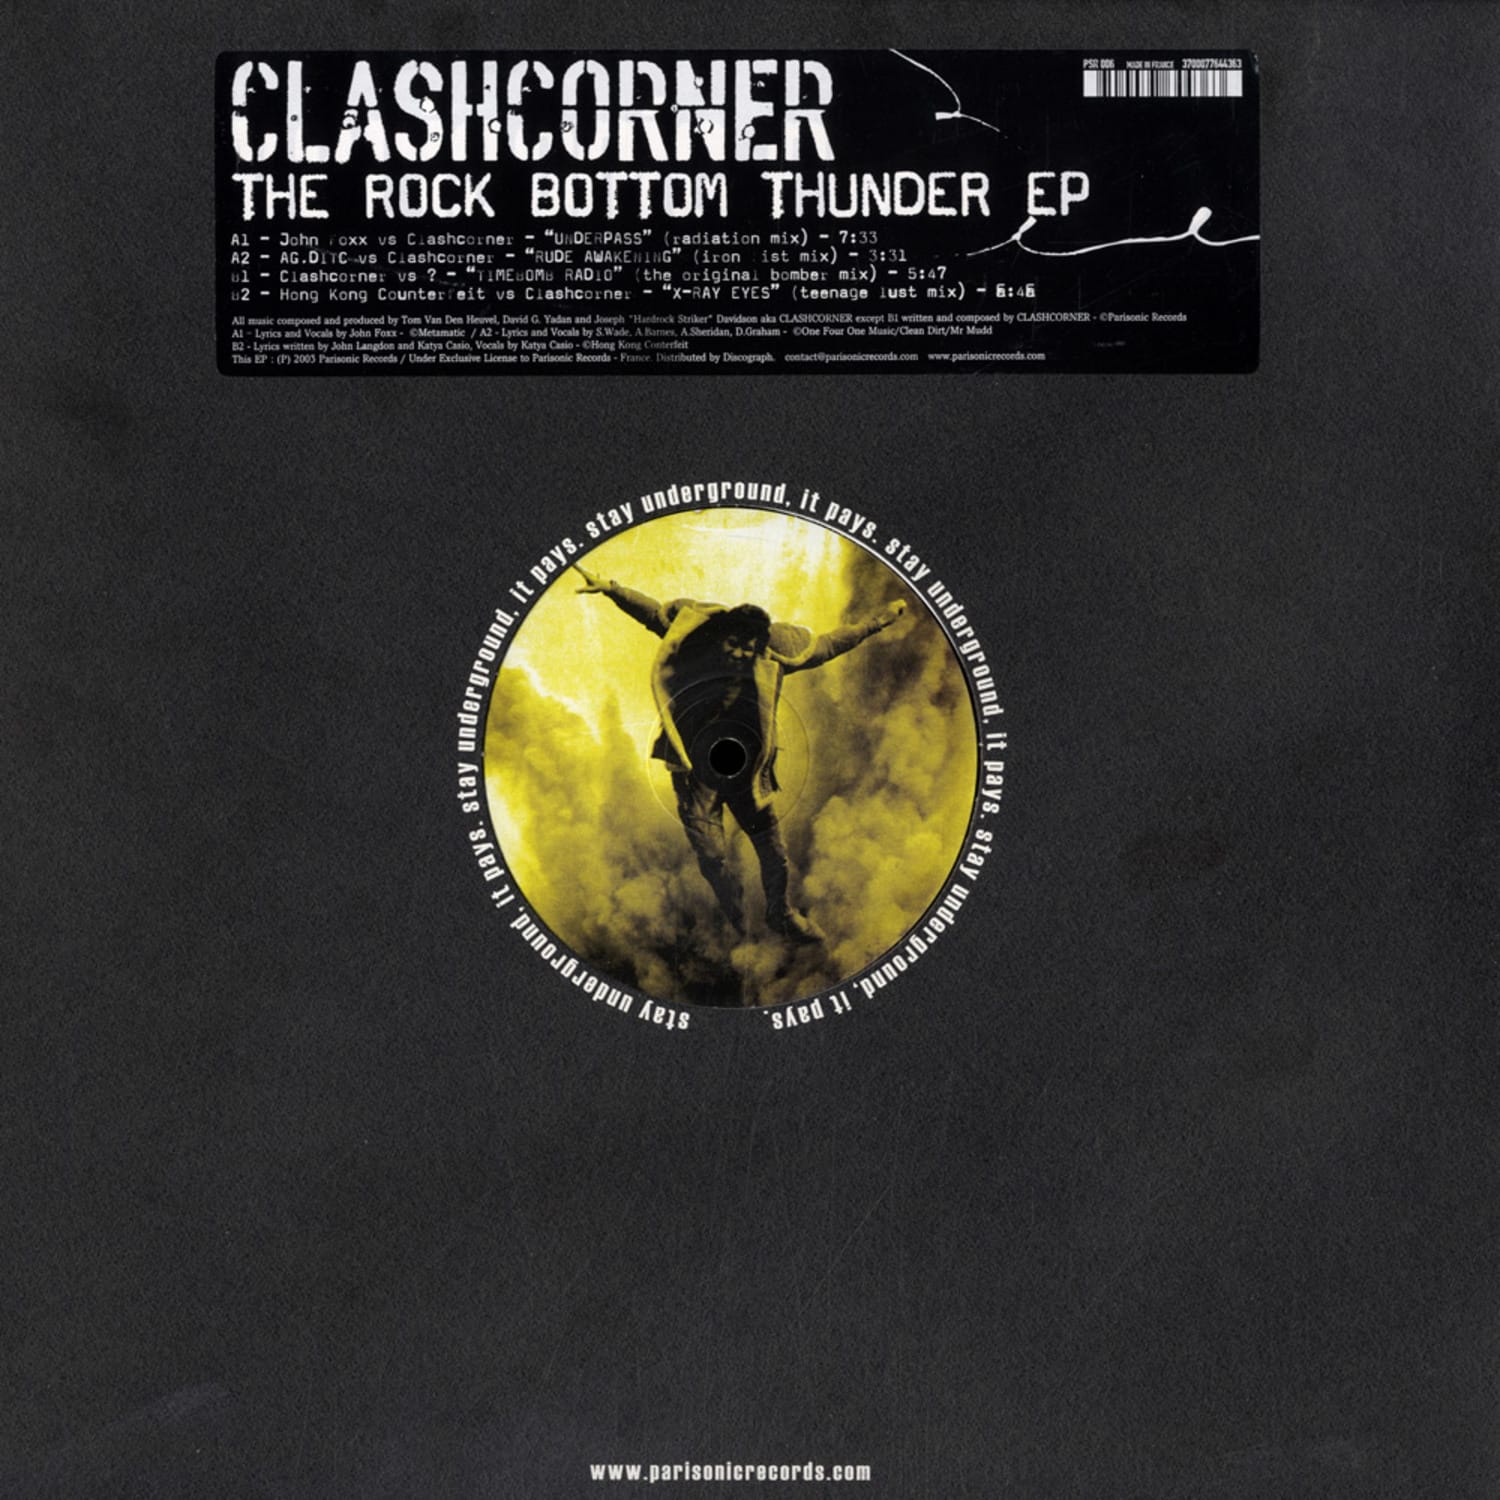 Clashcorner - THE ROCK BOTTOM THUNDER EP